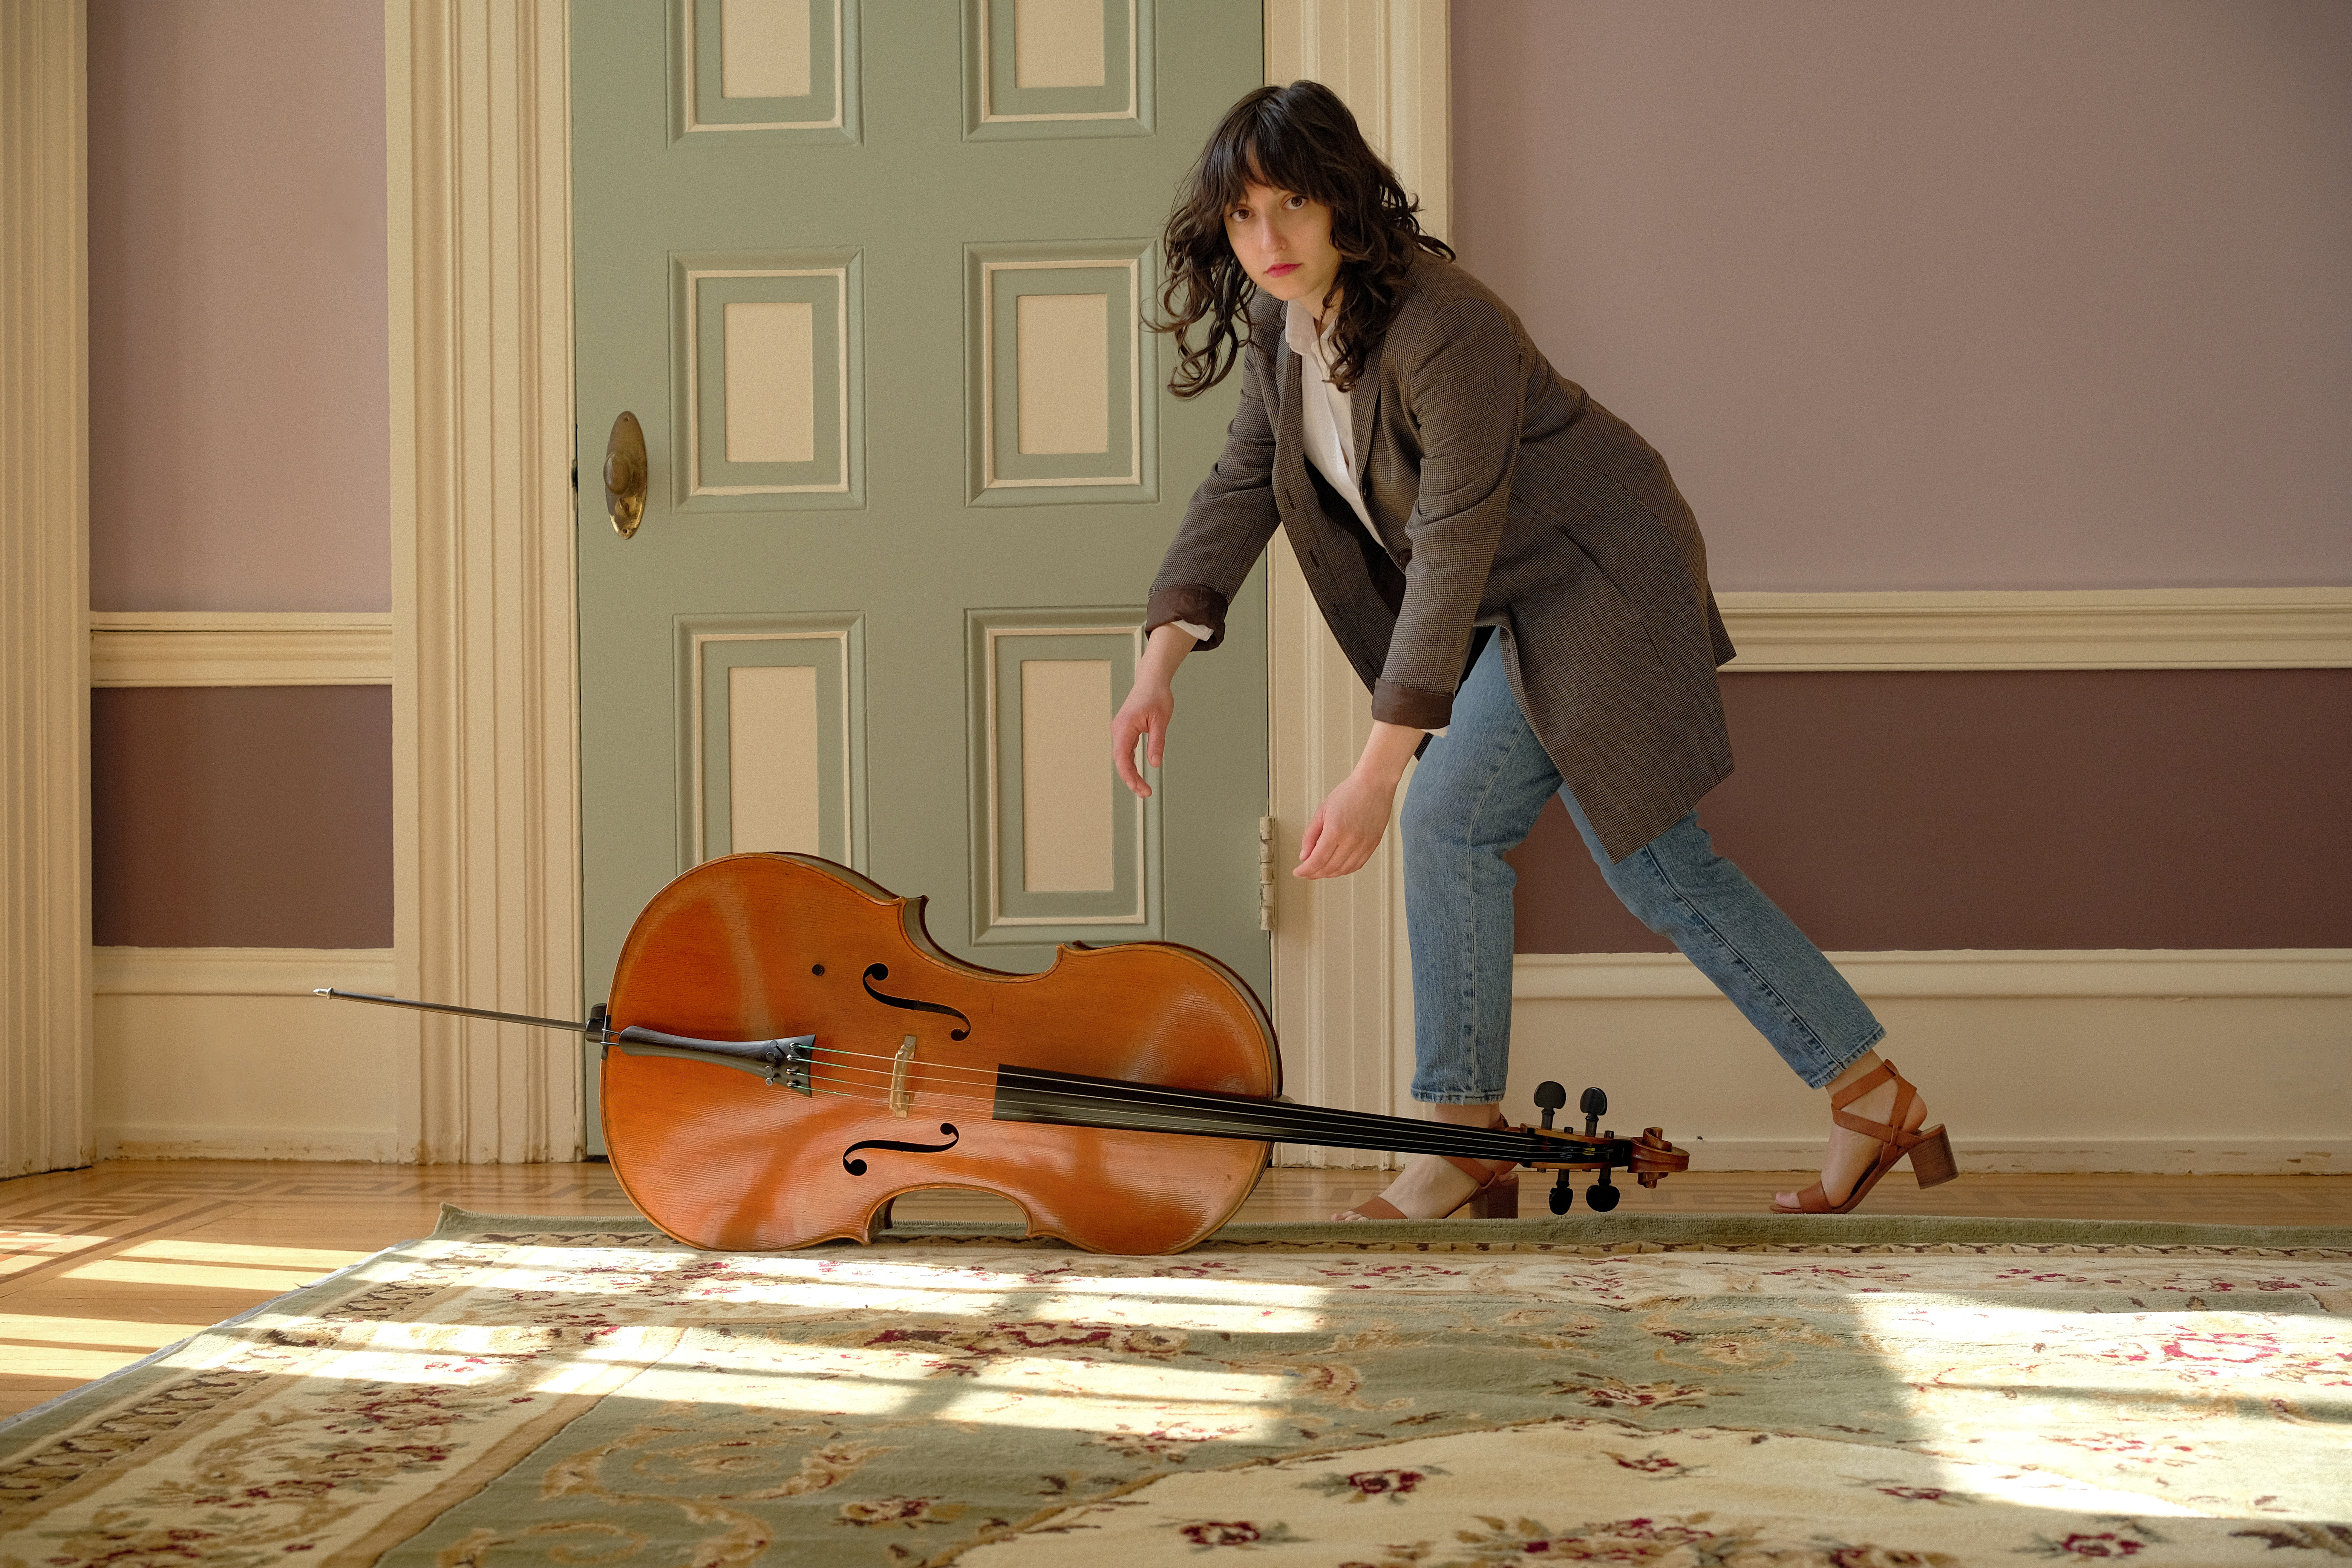 Carolina Diazgranados with her cello in a recording studio